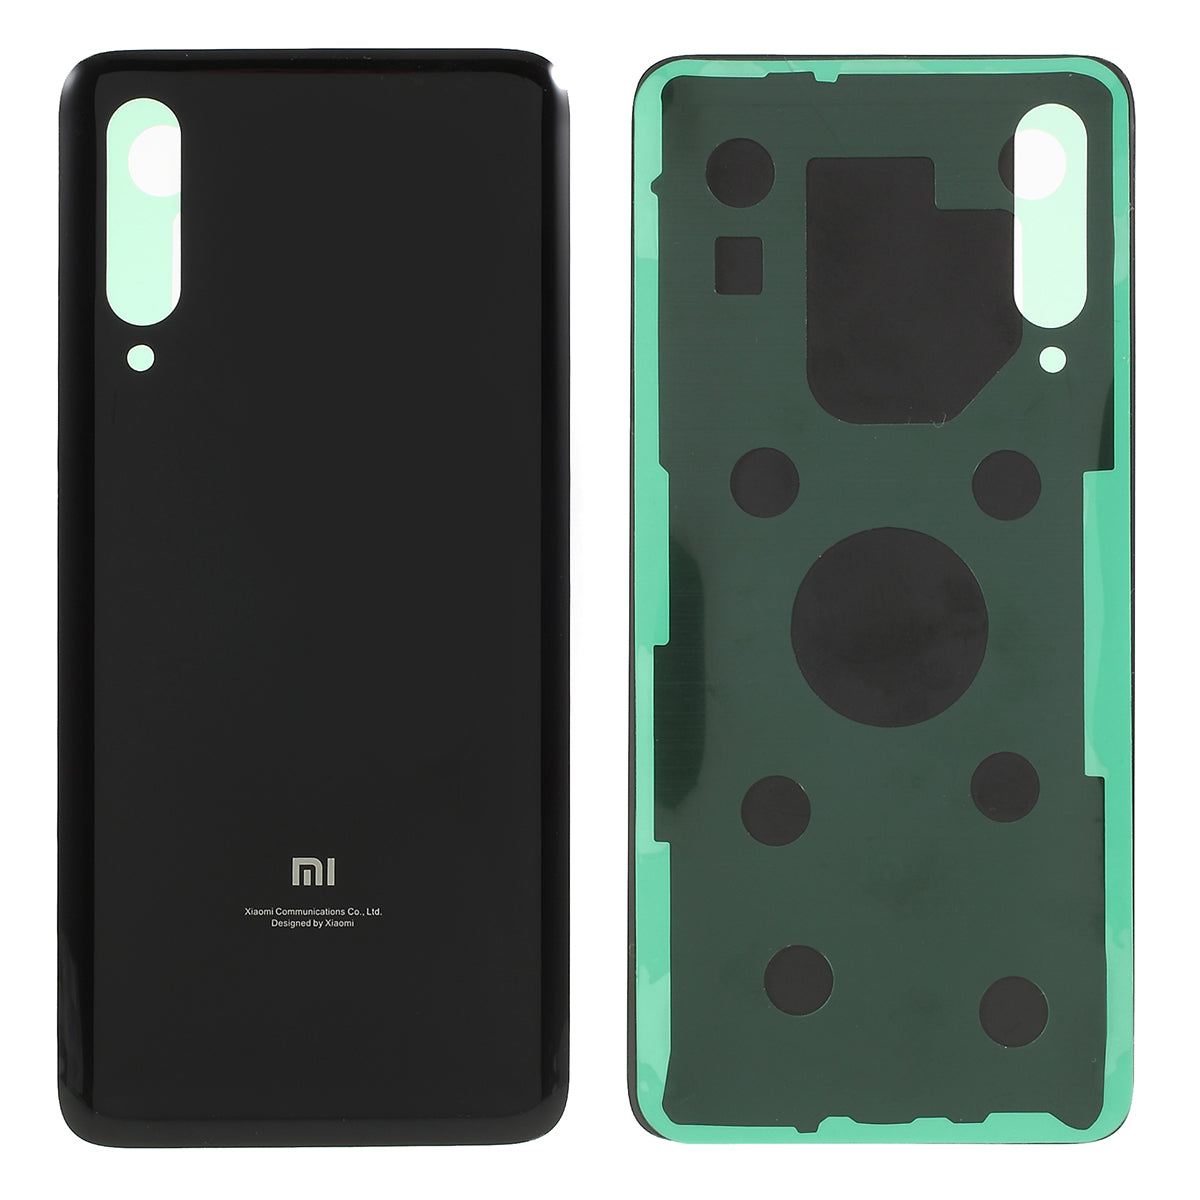 Battery Door Housing Back Cover Replacement for Xiaomi Mi 9 - Black